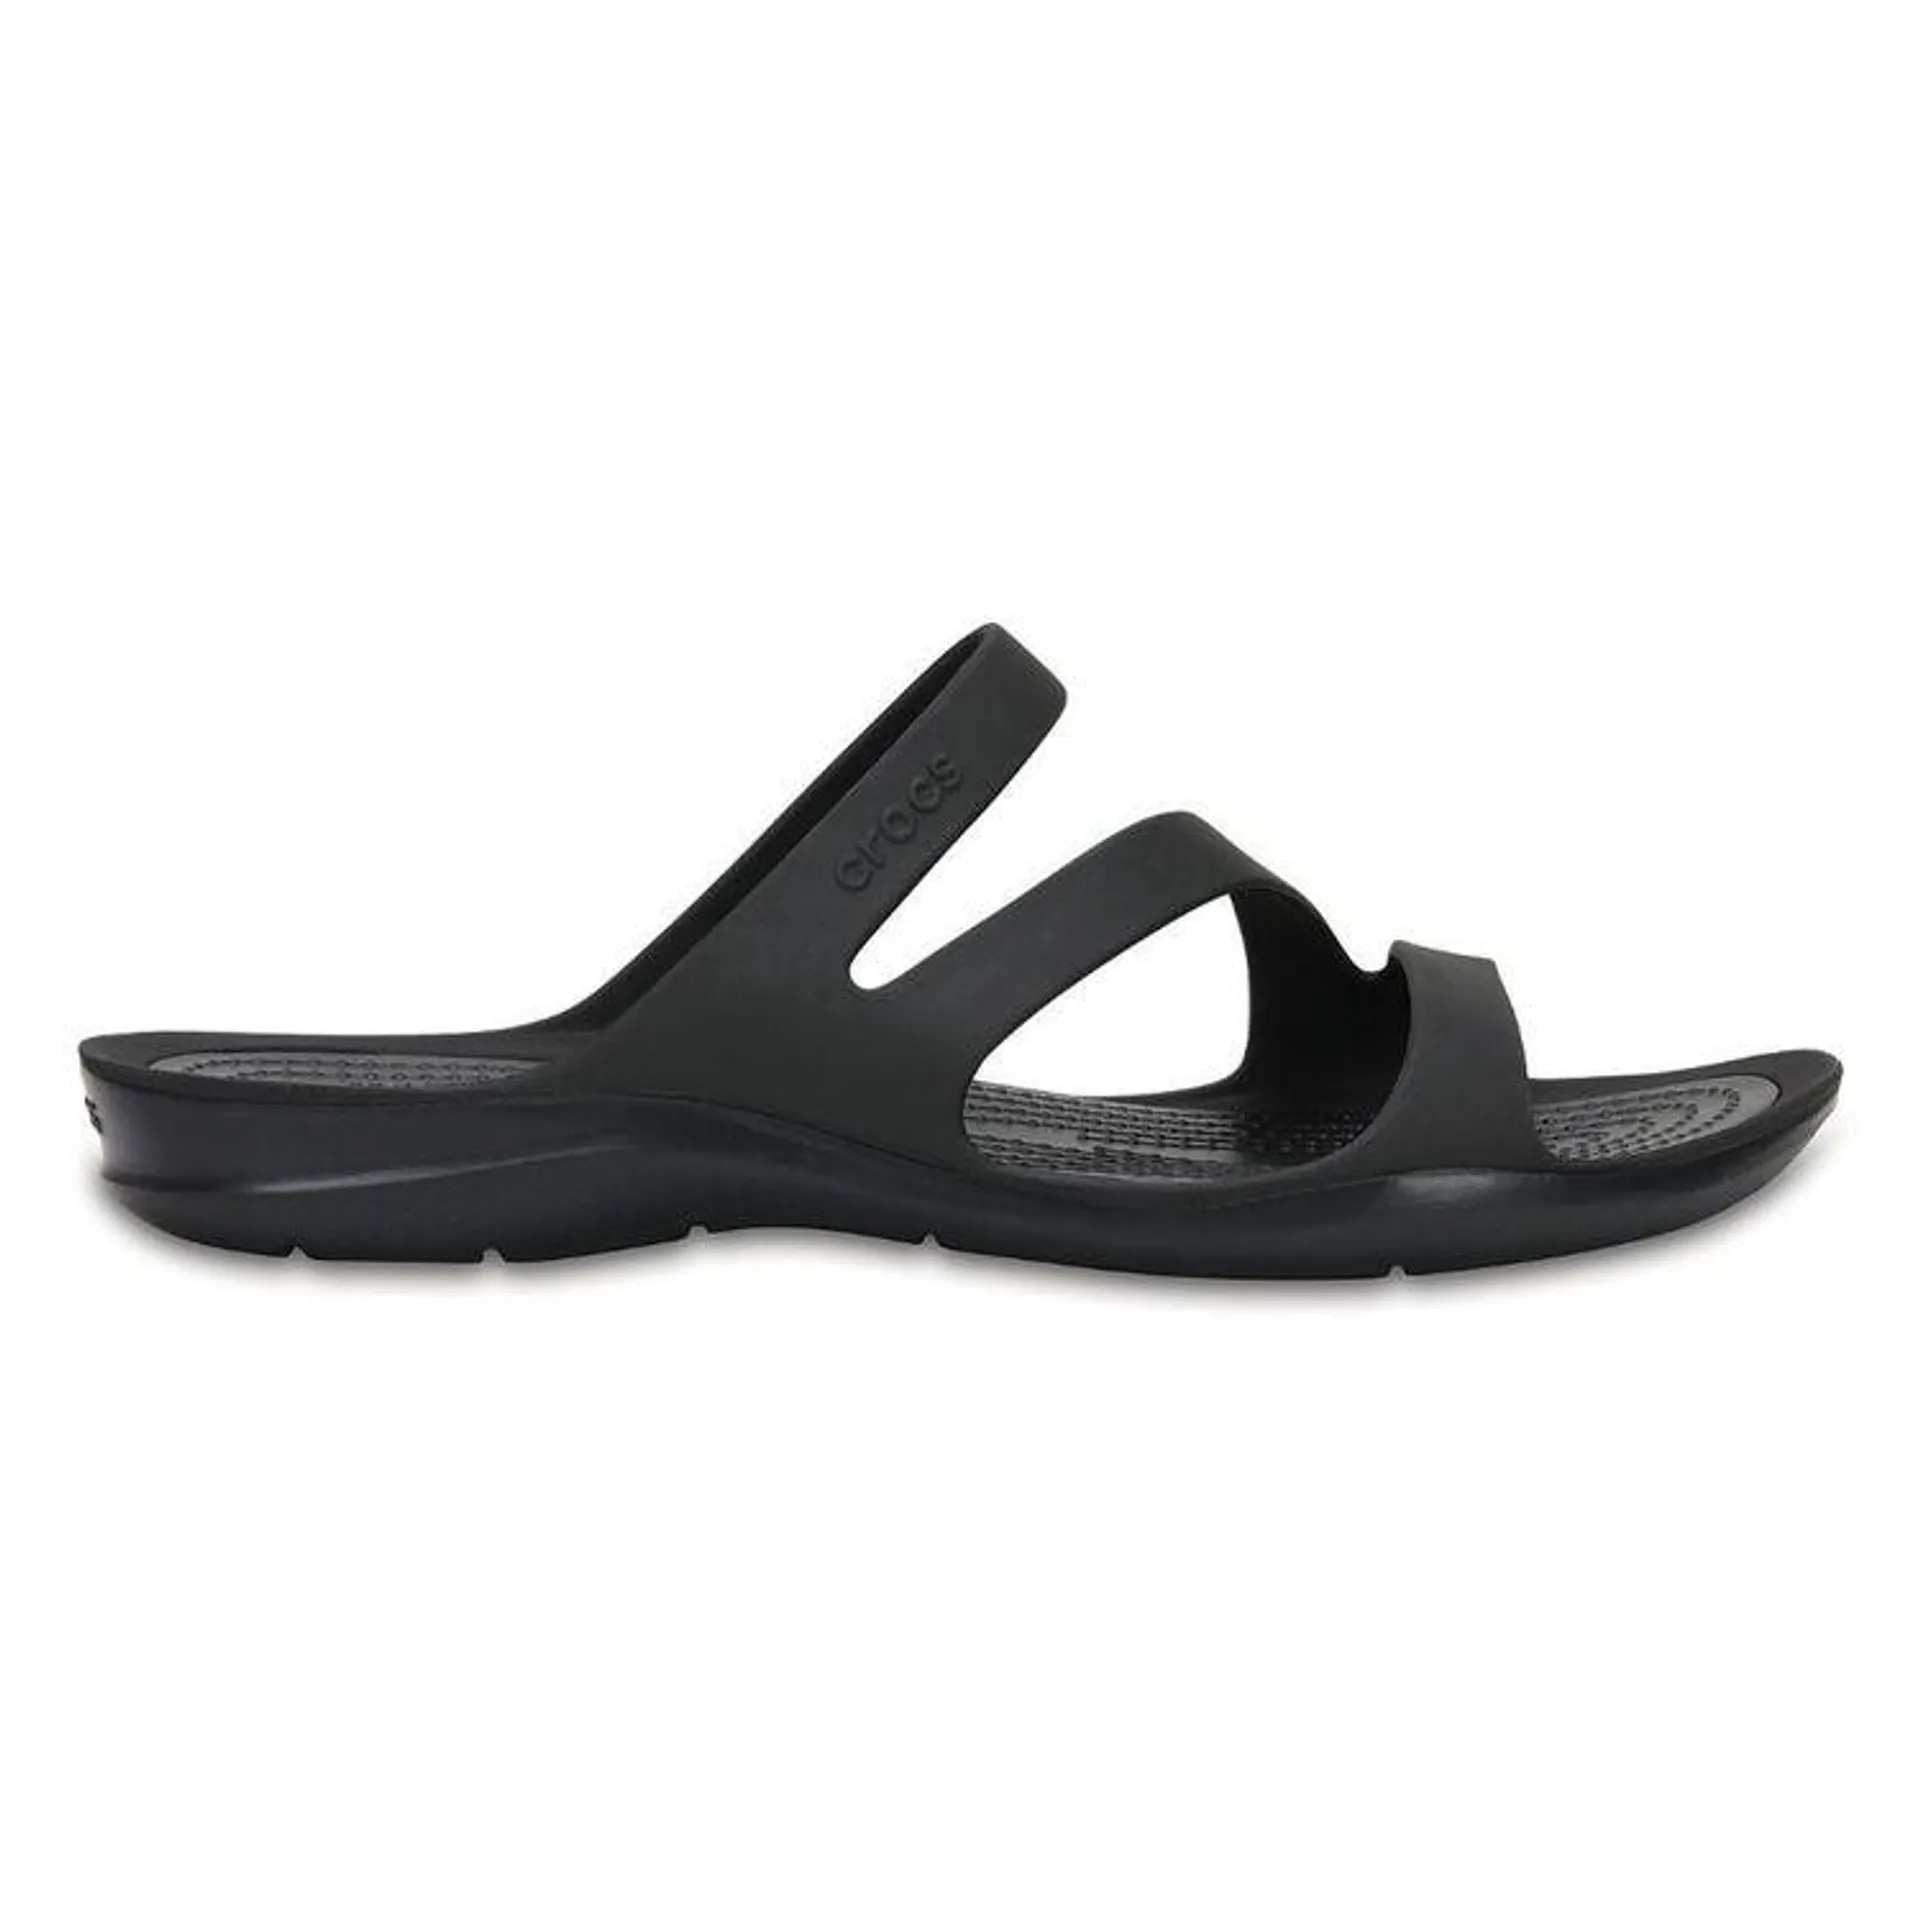 Crocs Women's Swiftwater Sandals Black & Black